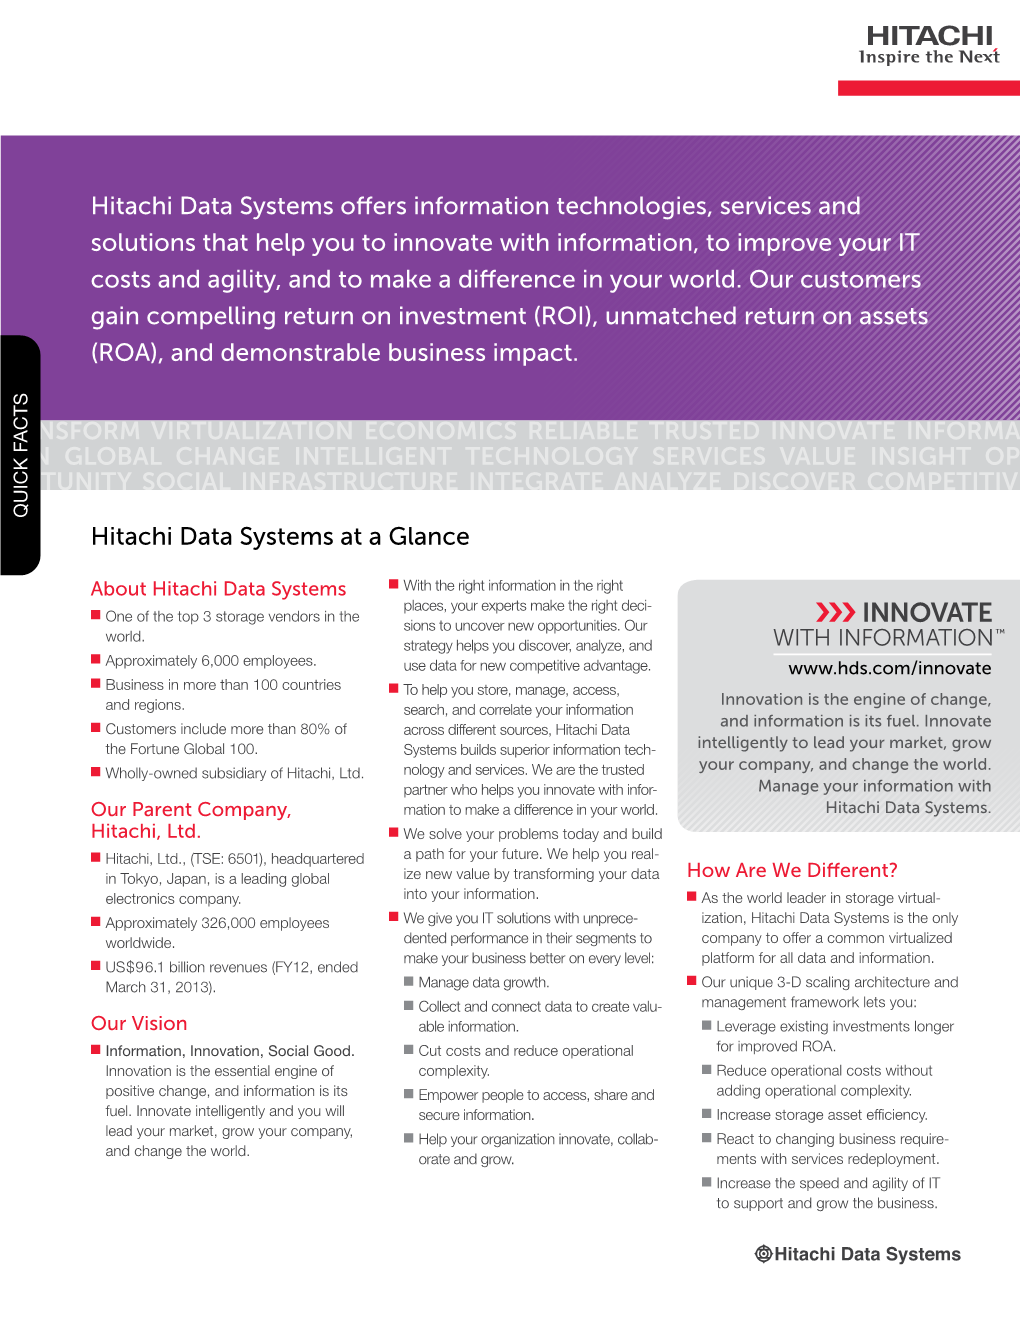 Hitachi Data Systems at a Glance